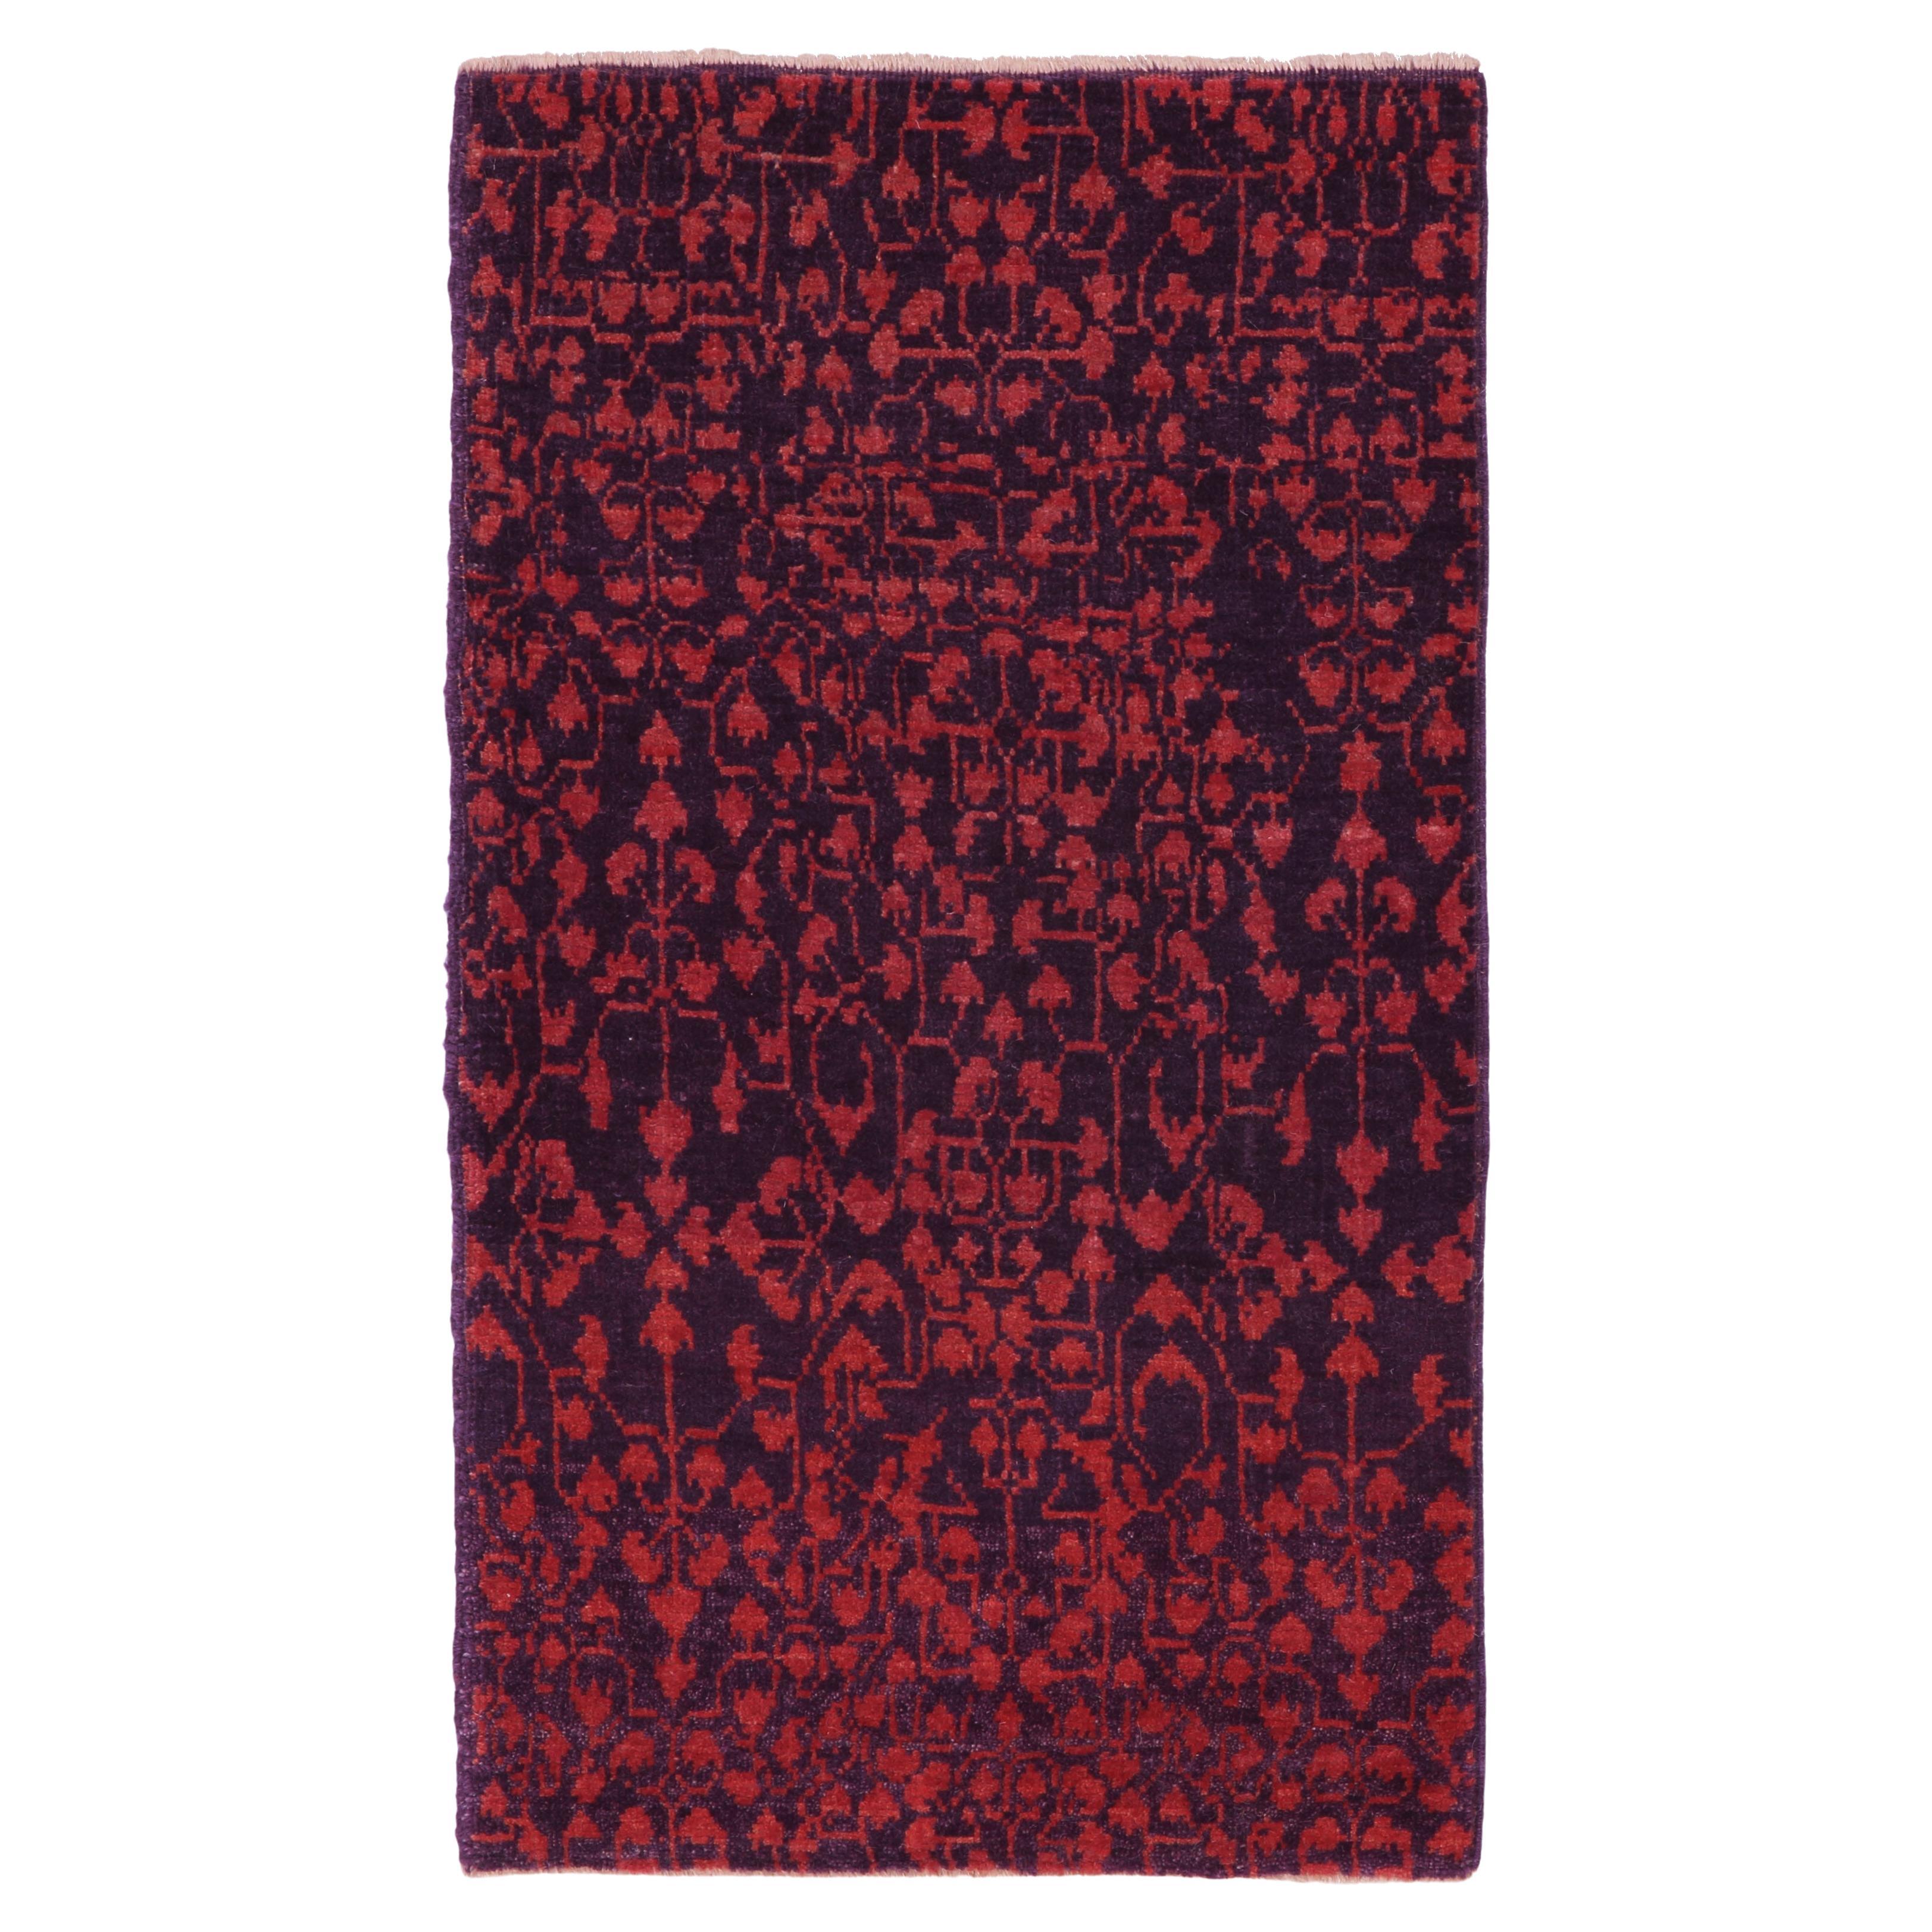 Ararat Rugs Mamluk Wagireh Rug with Leaf Lattice Design, Egypt Revival Carpet For Sale